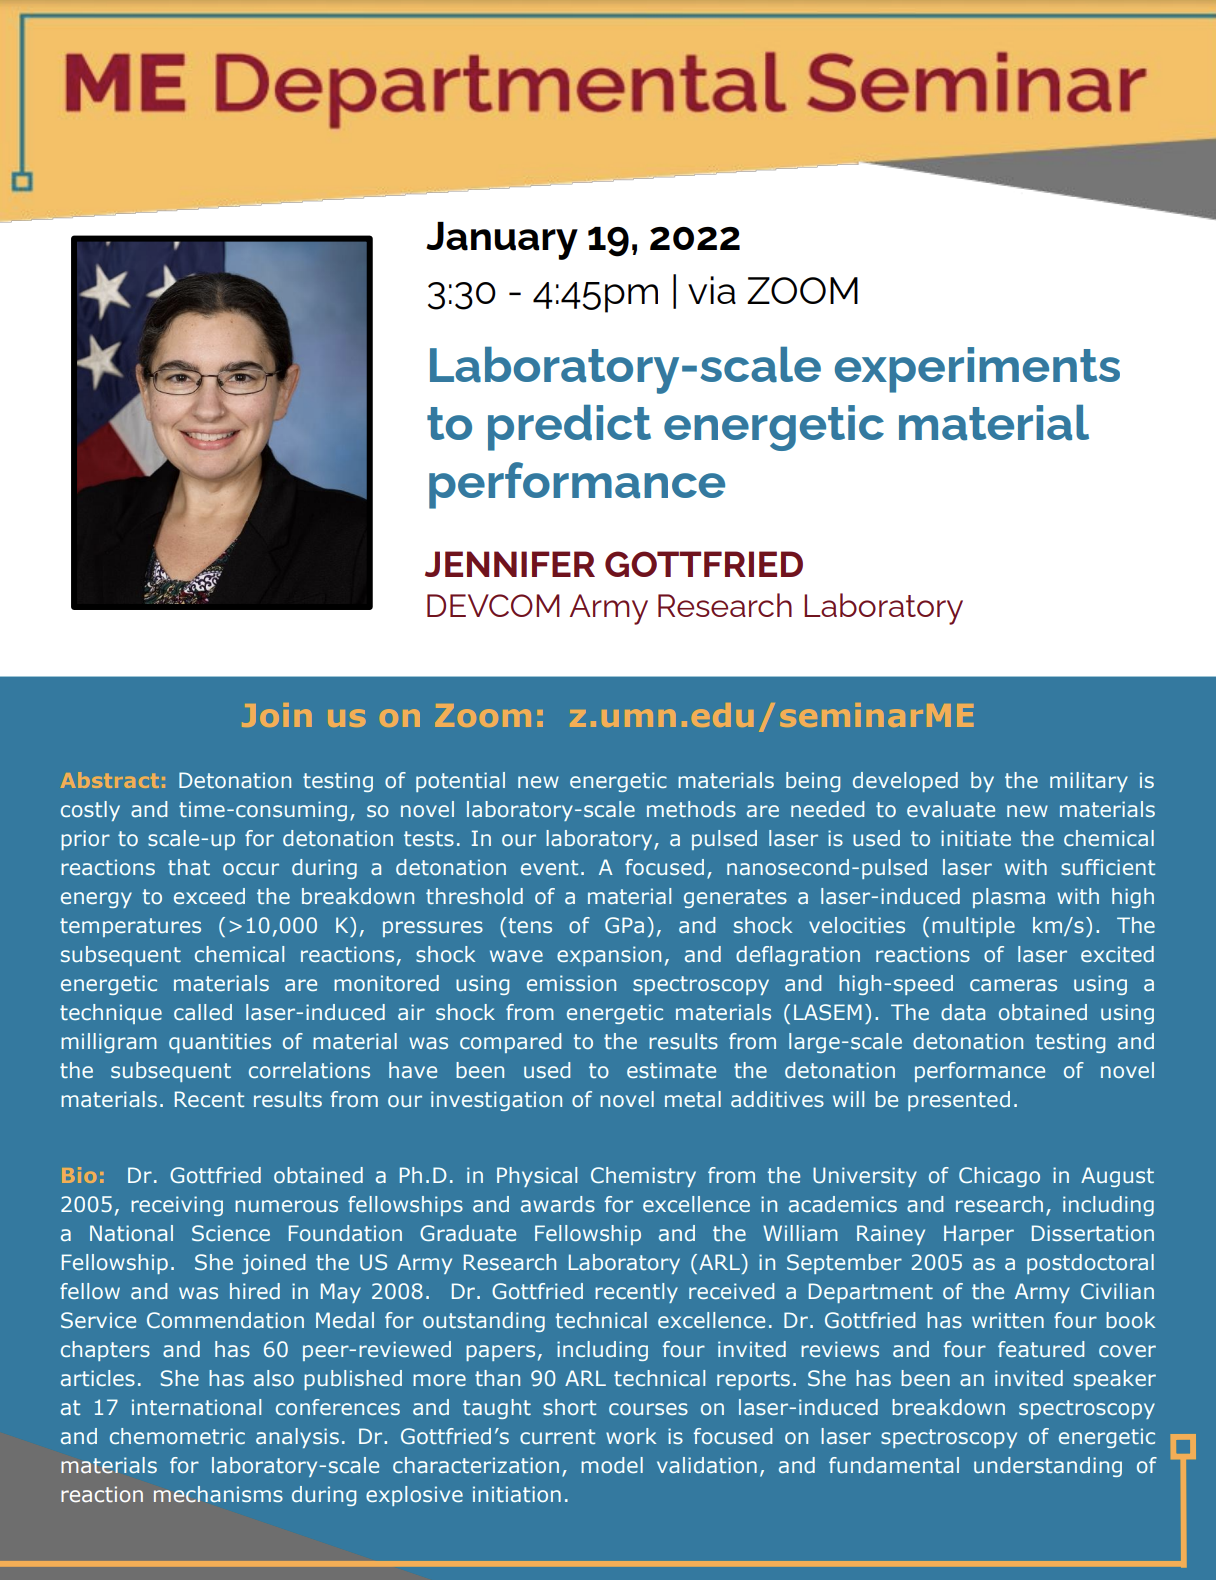 Departmental Seminar flyer for Jennifer Gottfried